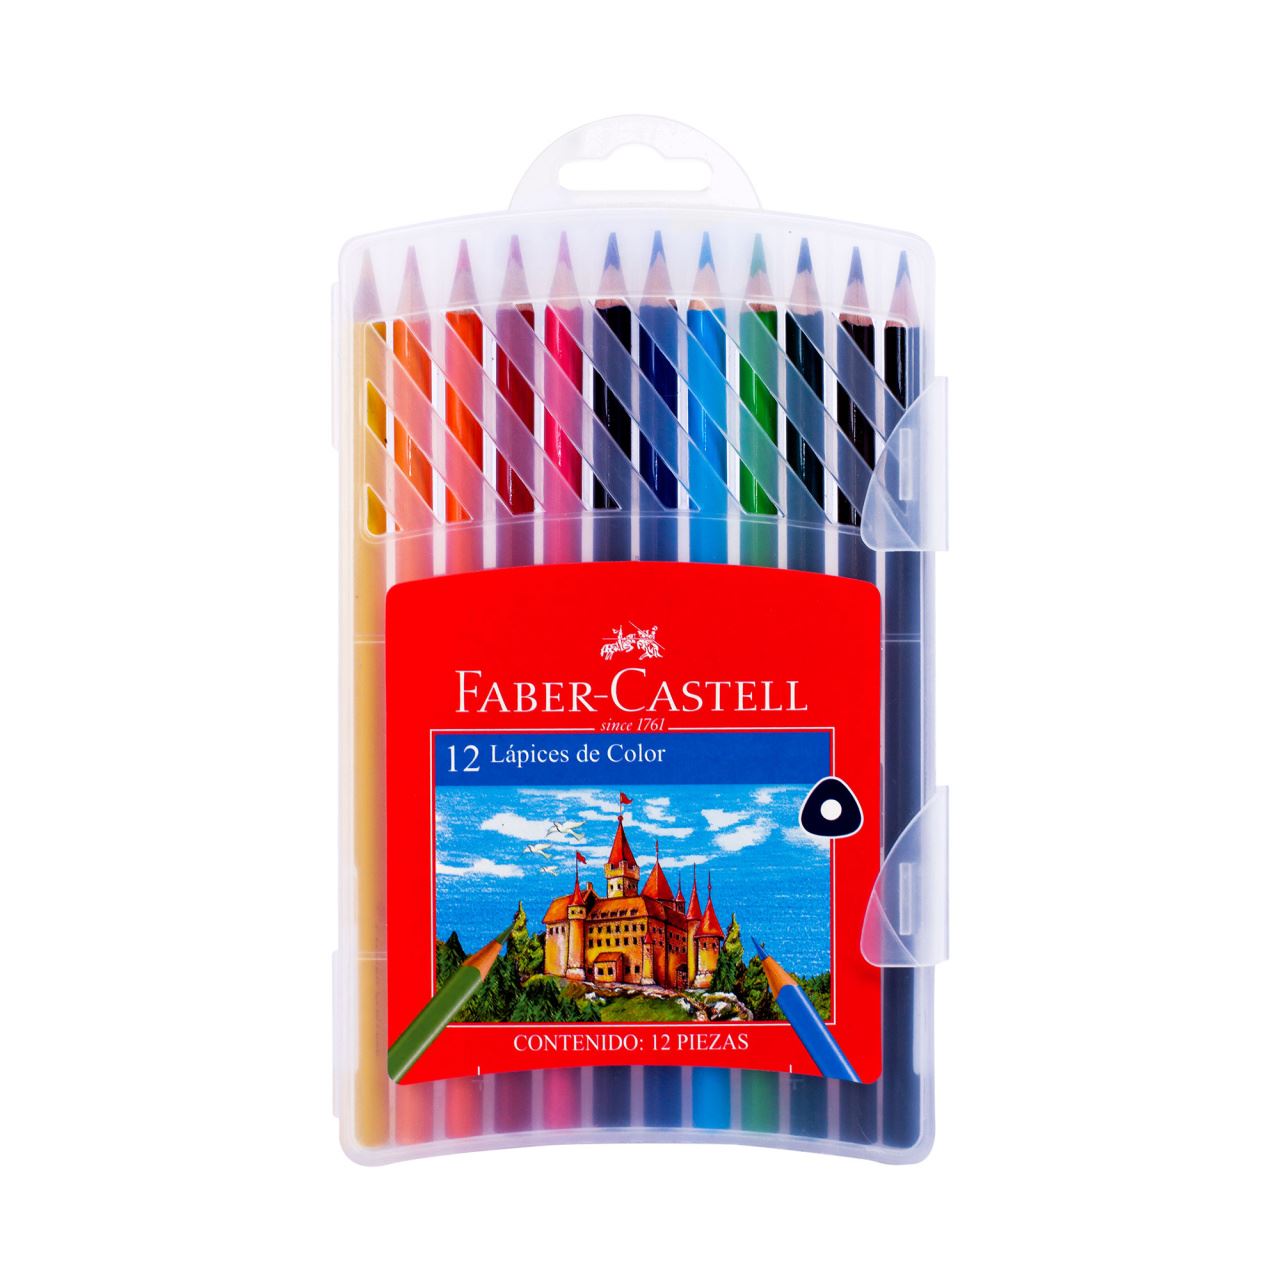 Faber-Castell - Ecolápices de color x 12 estuche rígido